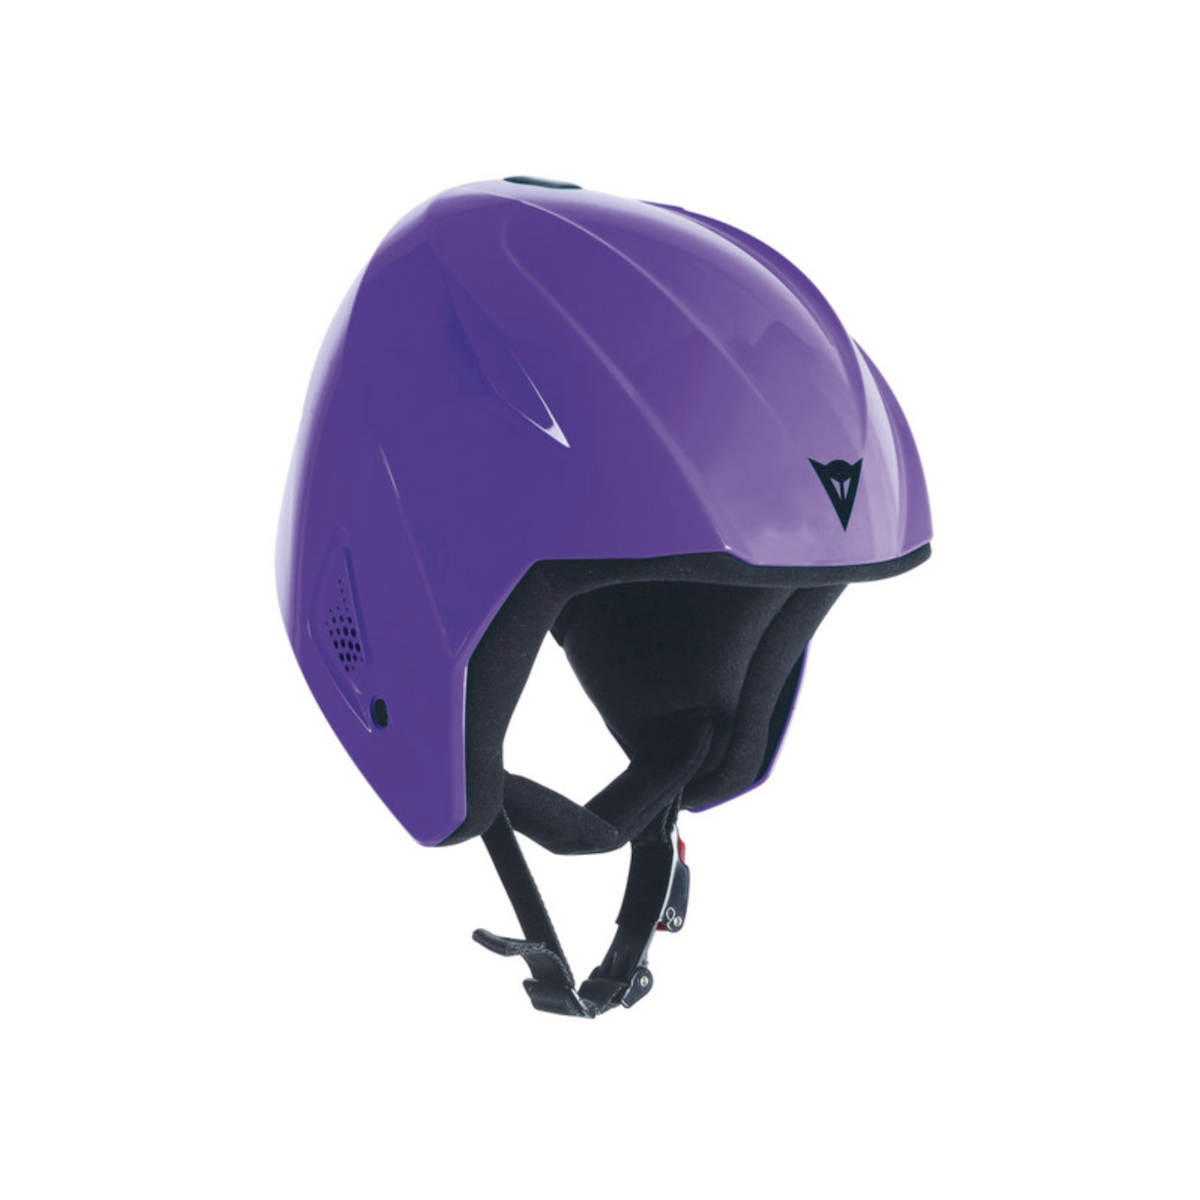 DAINESE SNOW TEAM JR EVO snow helmet - violet